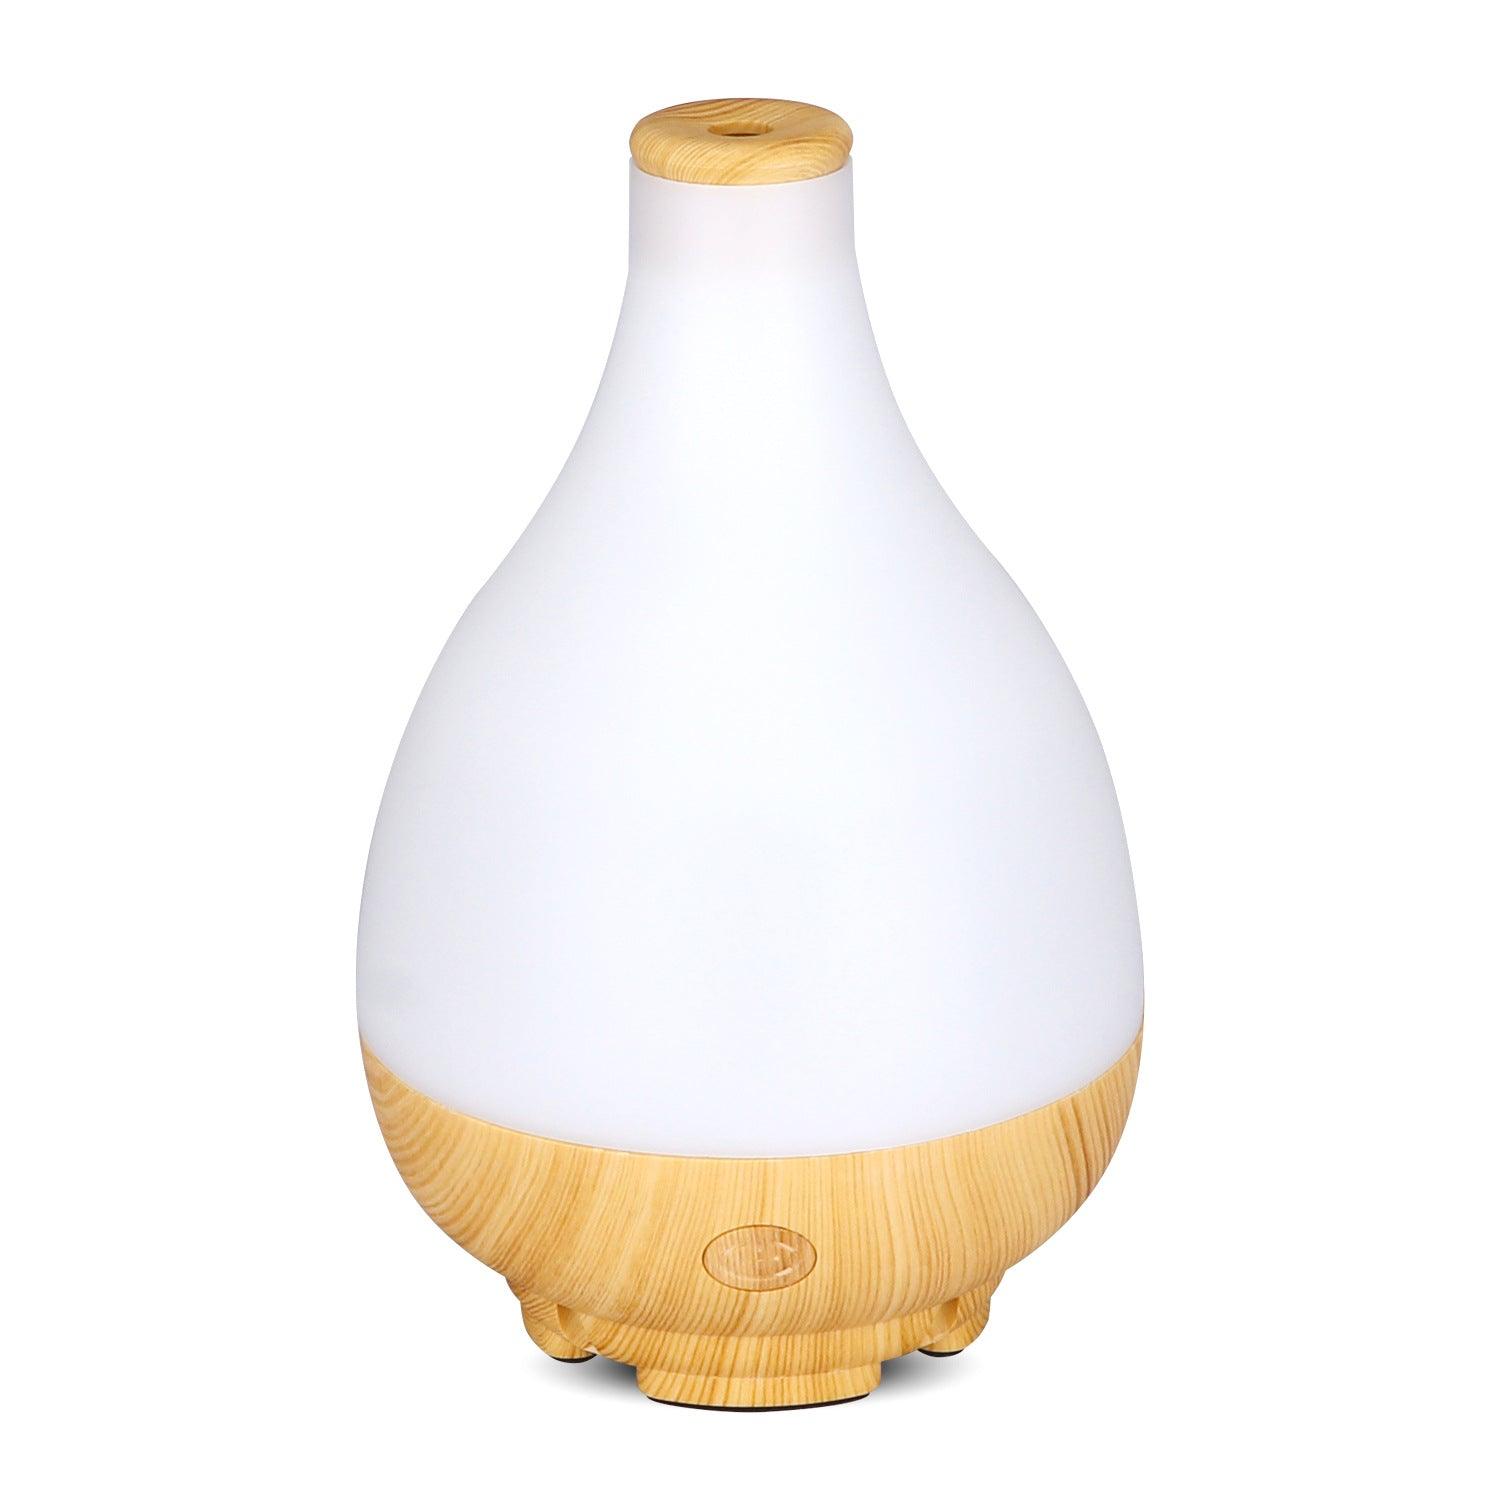 Hobefi Light Wood Grain / US Plug Ultrasonic Aroma Diffuser